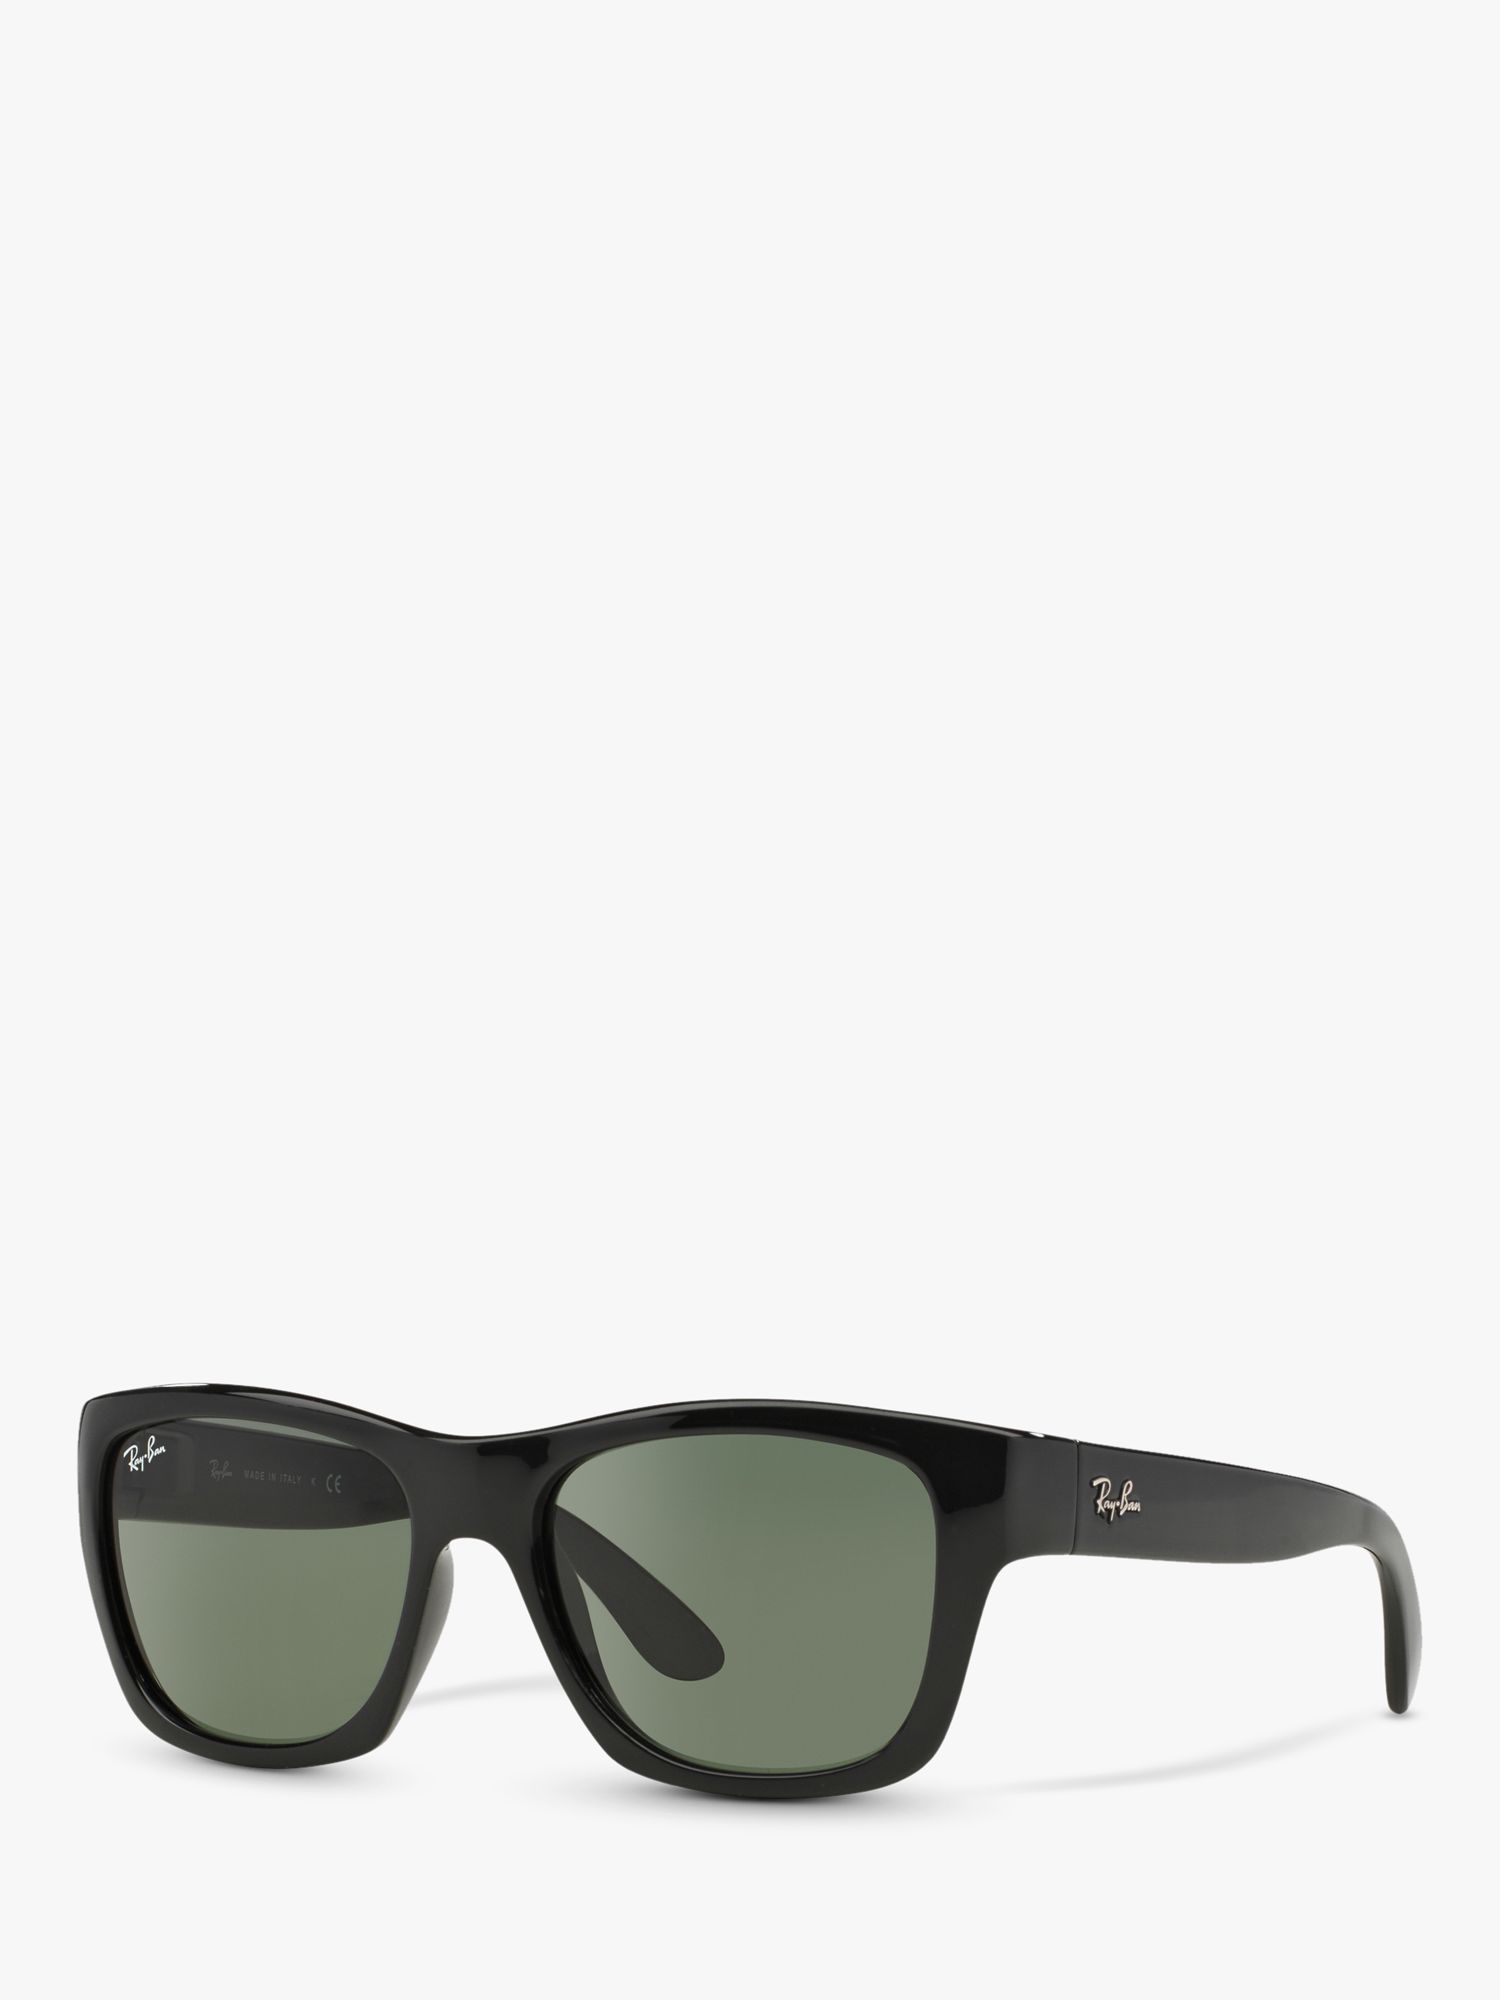 Ray-Ban RB4194 Unisex Square Sunglasses, Black/Green at John Lewis &  Partners